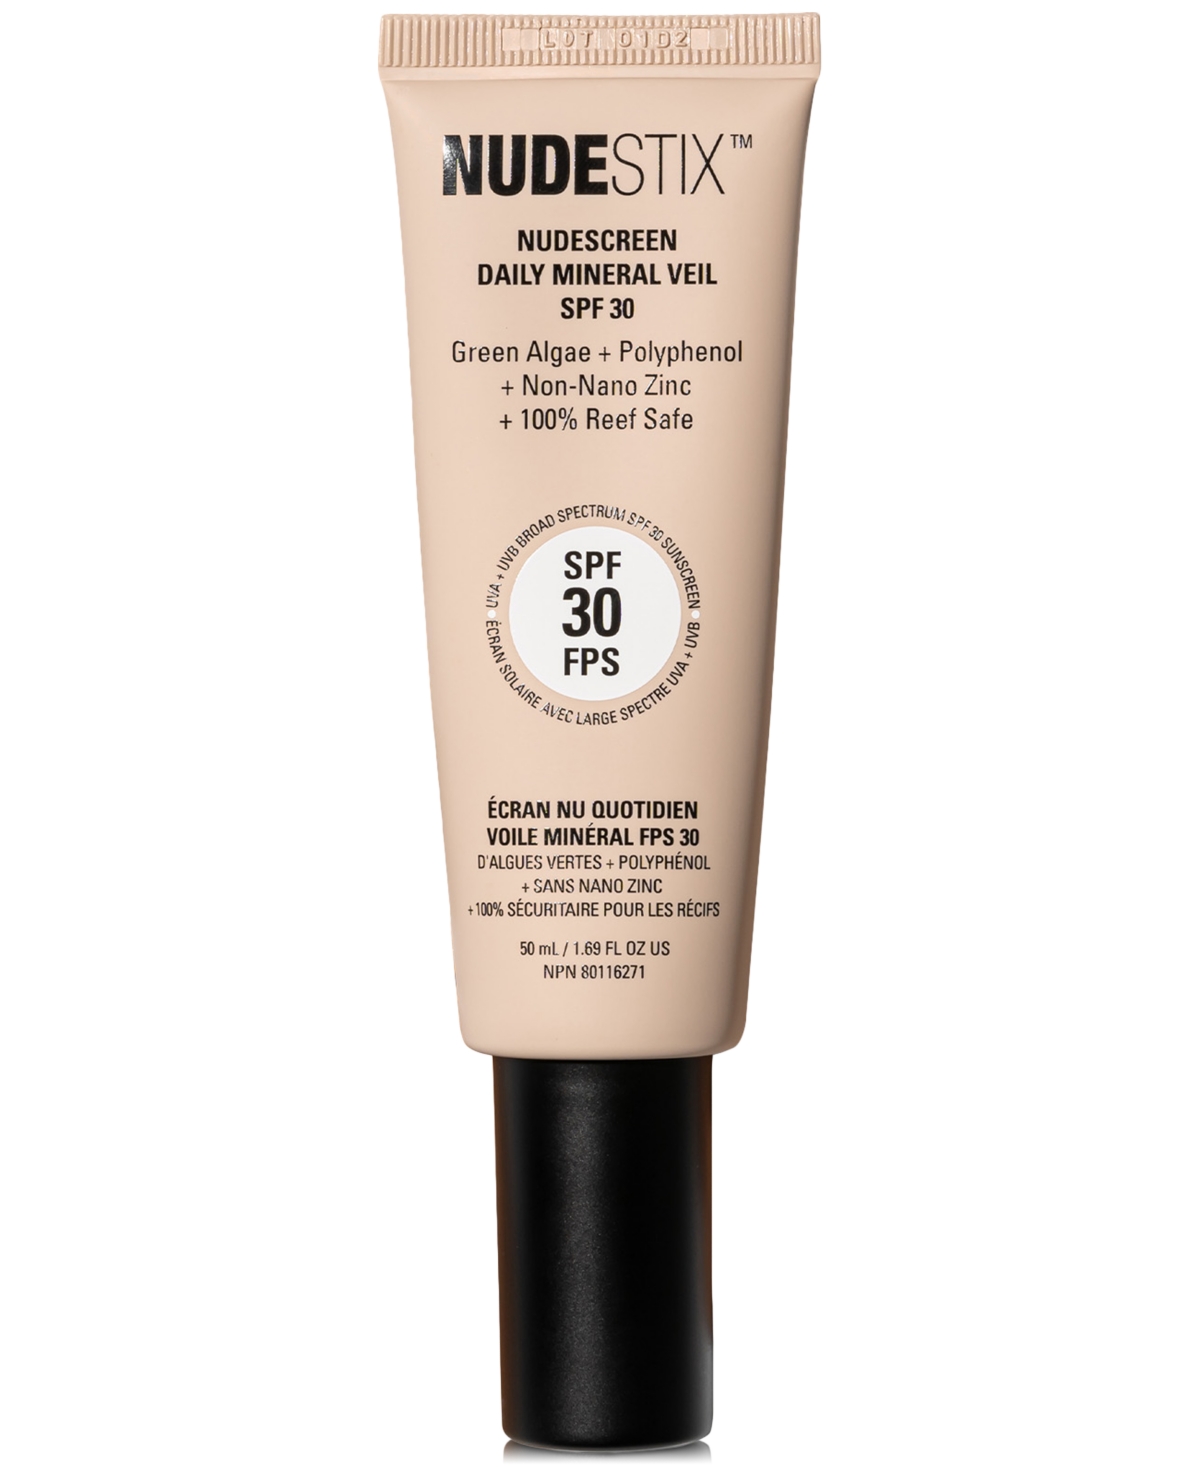 Nudestix Nudescreen Daily Mineral Veil Spf 30, 1.69 Oz. In Nude - (natural Light Tint)